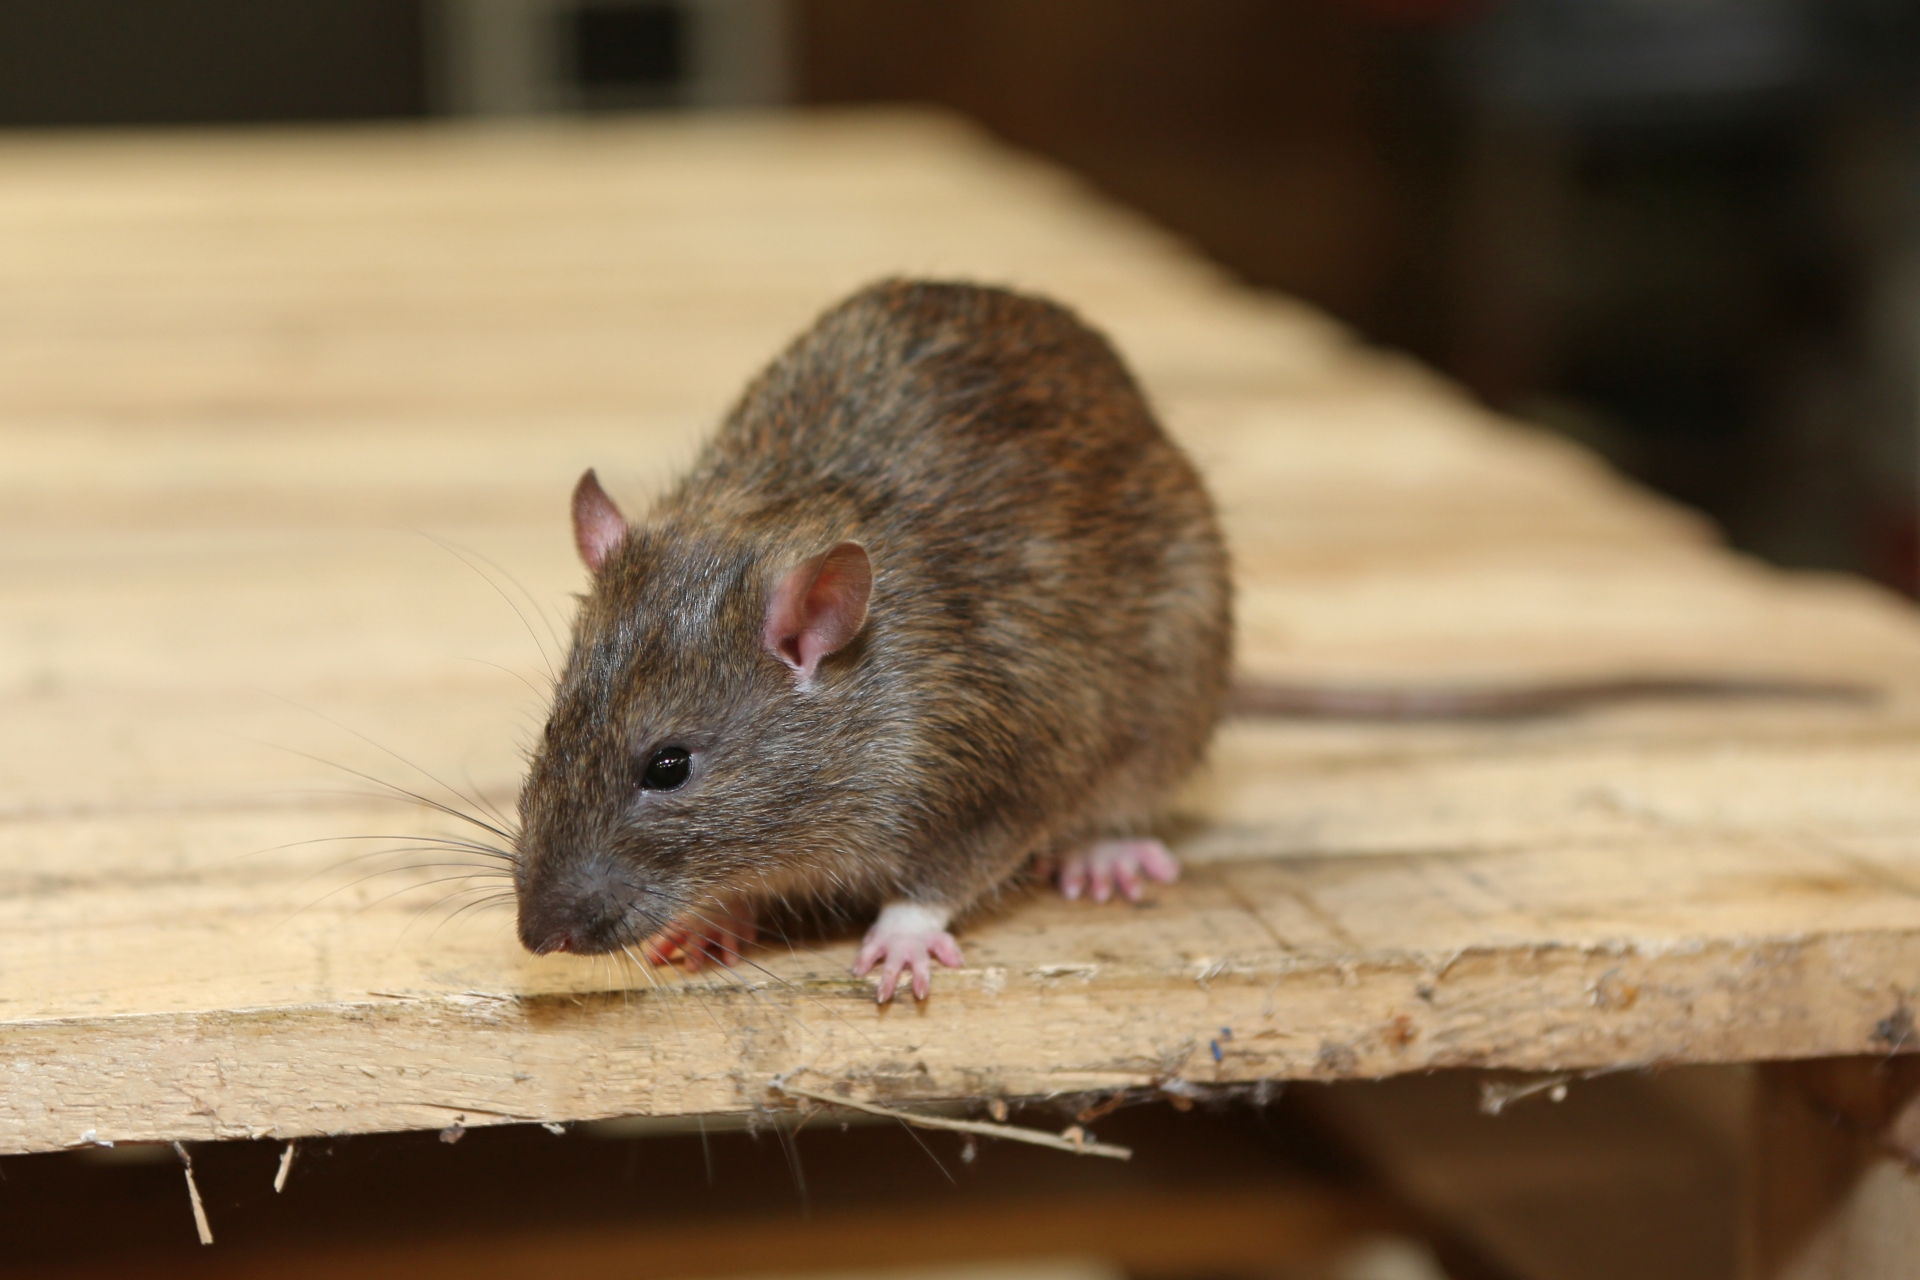 Rat extermination, Pest Control in Roehampton, SW15. Call Now 020 8166 9746